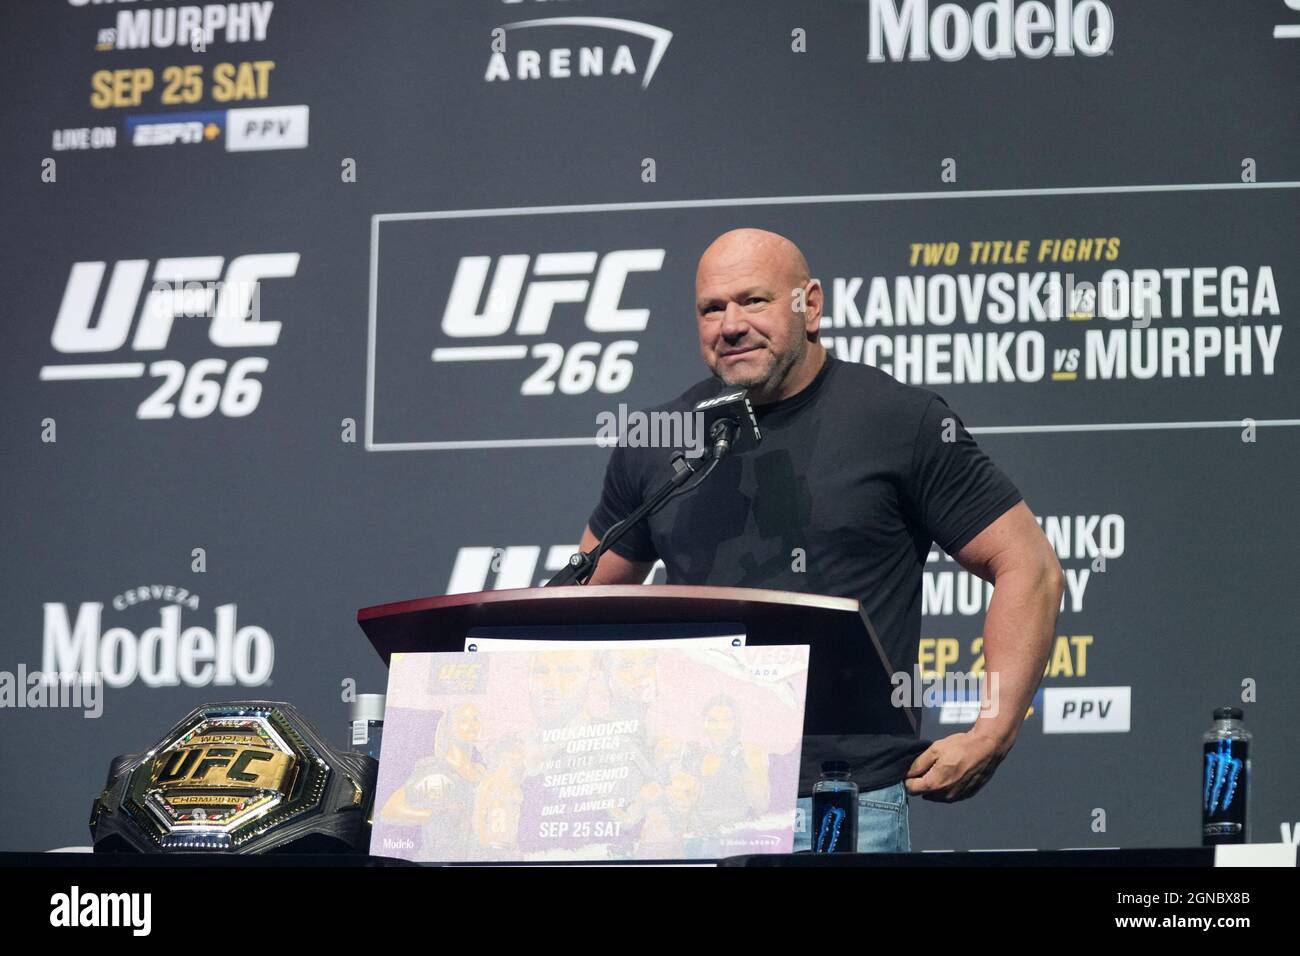 Dana White eröffnet die Pressekonferenz in der MGM Park Arena für UFC266 - Volkanovski vs Ortega - Pressekonferenz am 23. September 2021 in Las Vegas, NV, USA. Foto von Louis Grasse/PxImages/ABACAPRESS.COM Stockfoto